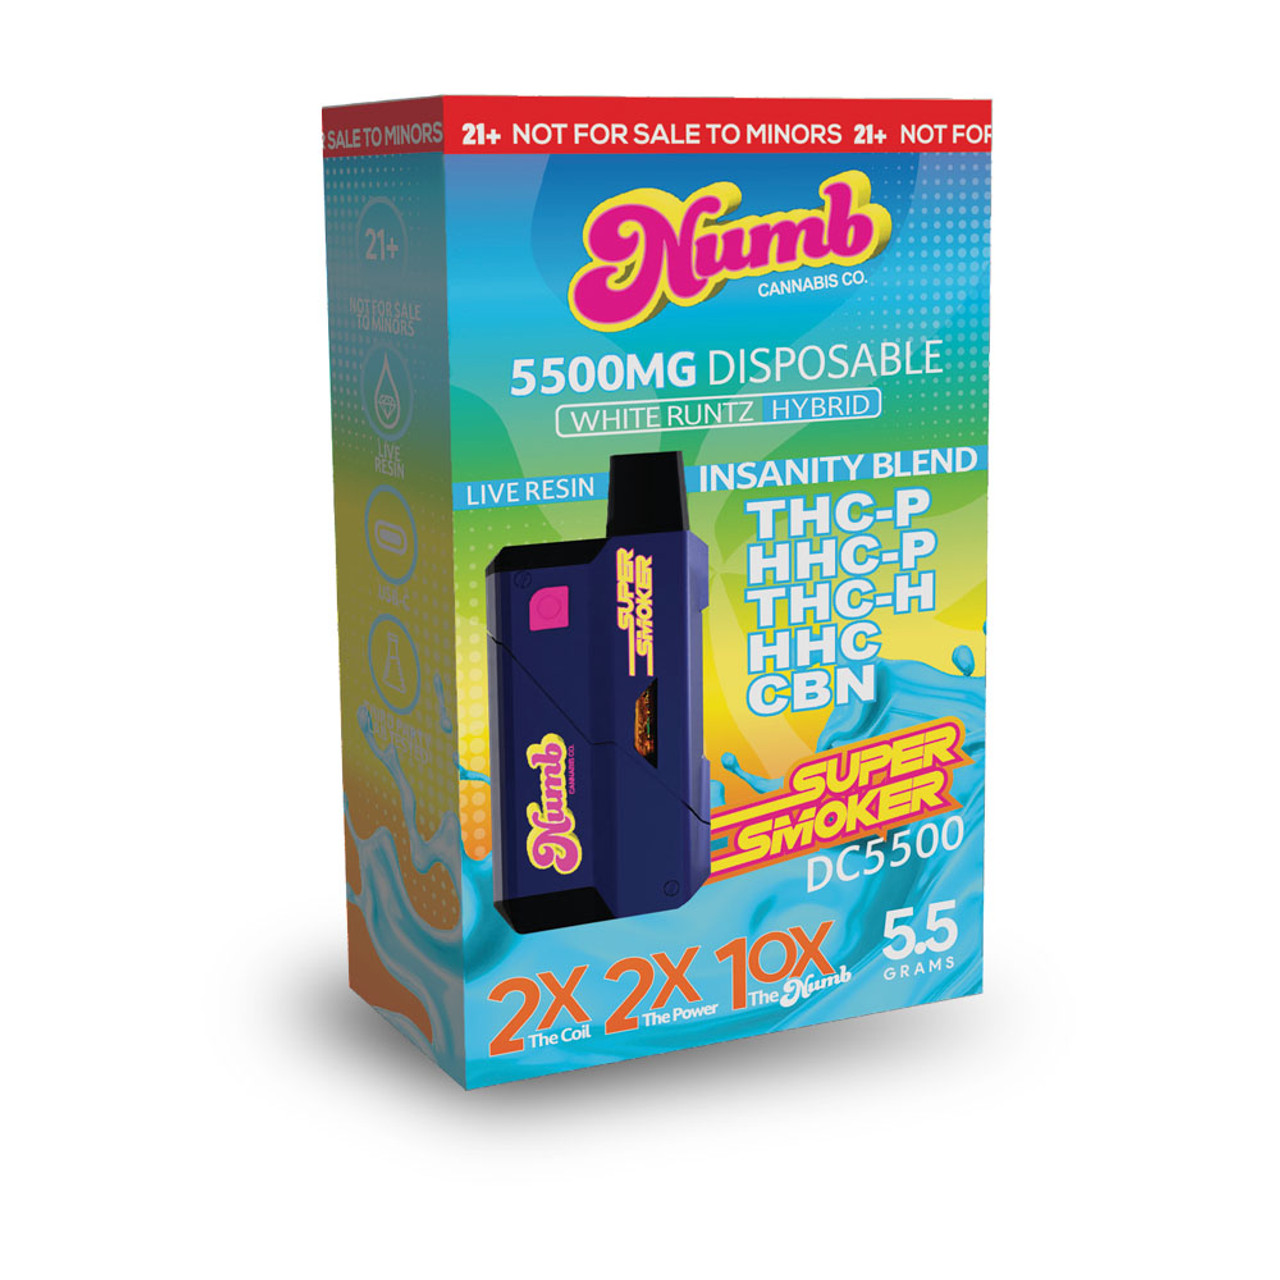 Numb Super Smoker 5.5g Disposable Vape Insanity Blend - 6 ct. Display